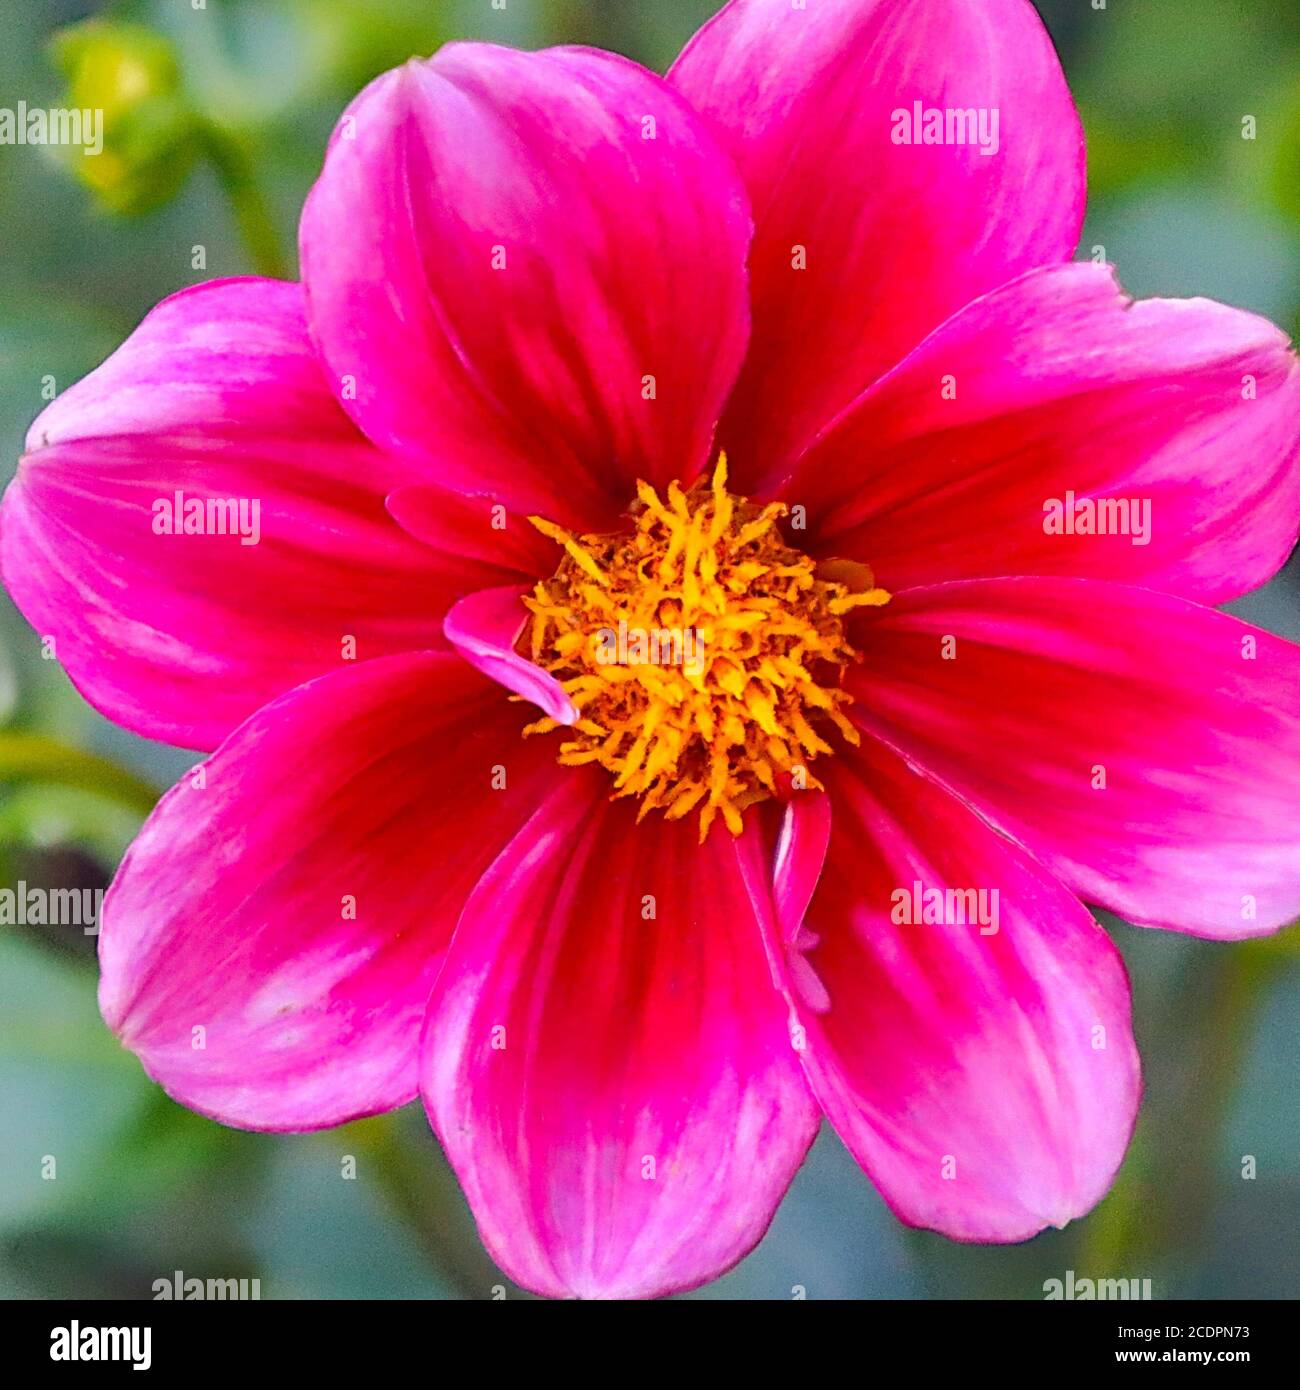 Plants with macro photographic representation of flowers Stock Photo